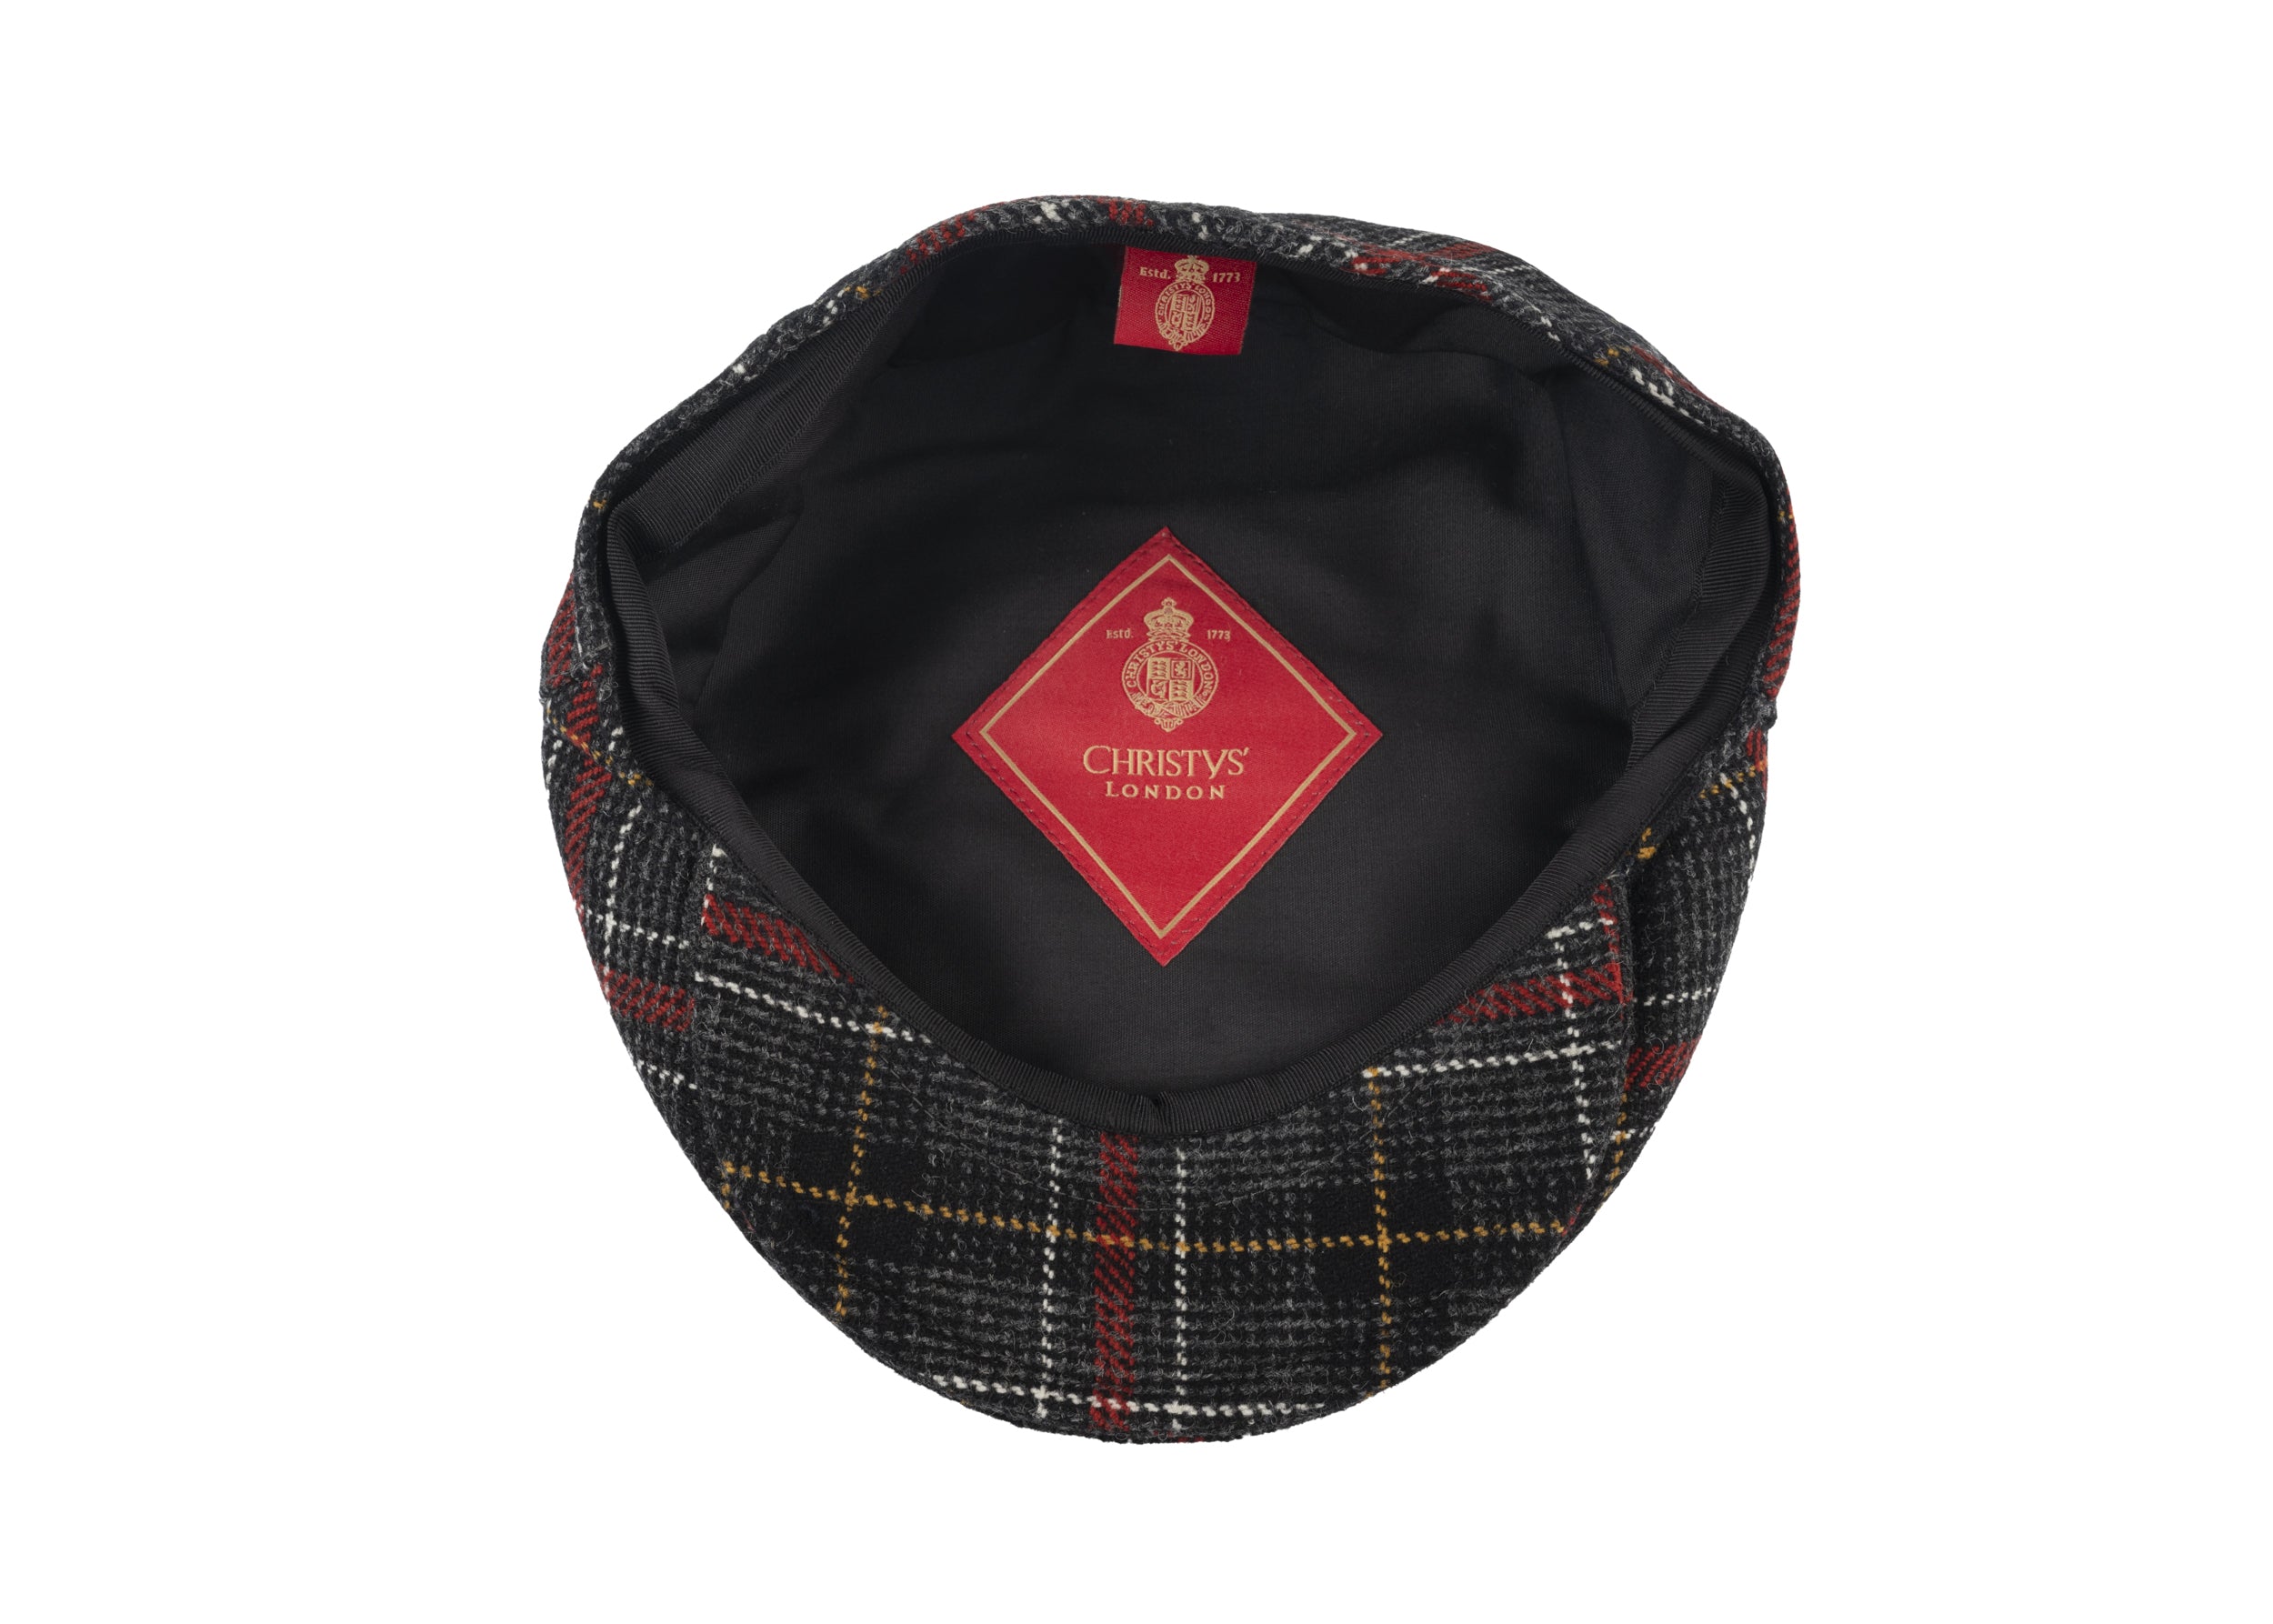 Balmoral flat cap in Christy tweed fabric